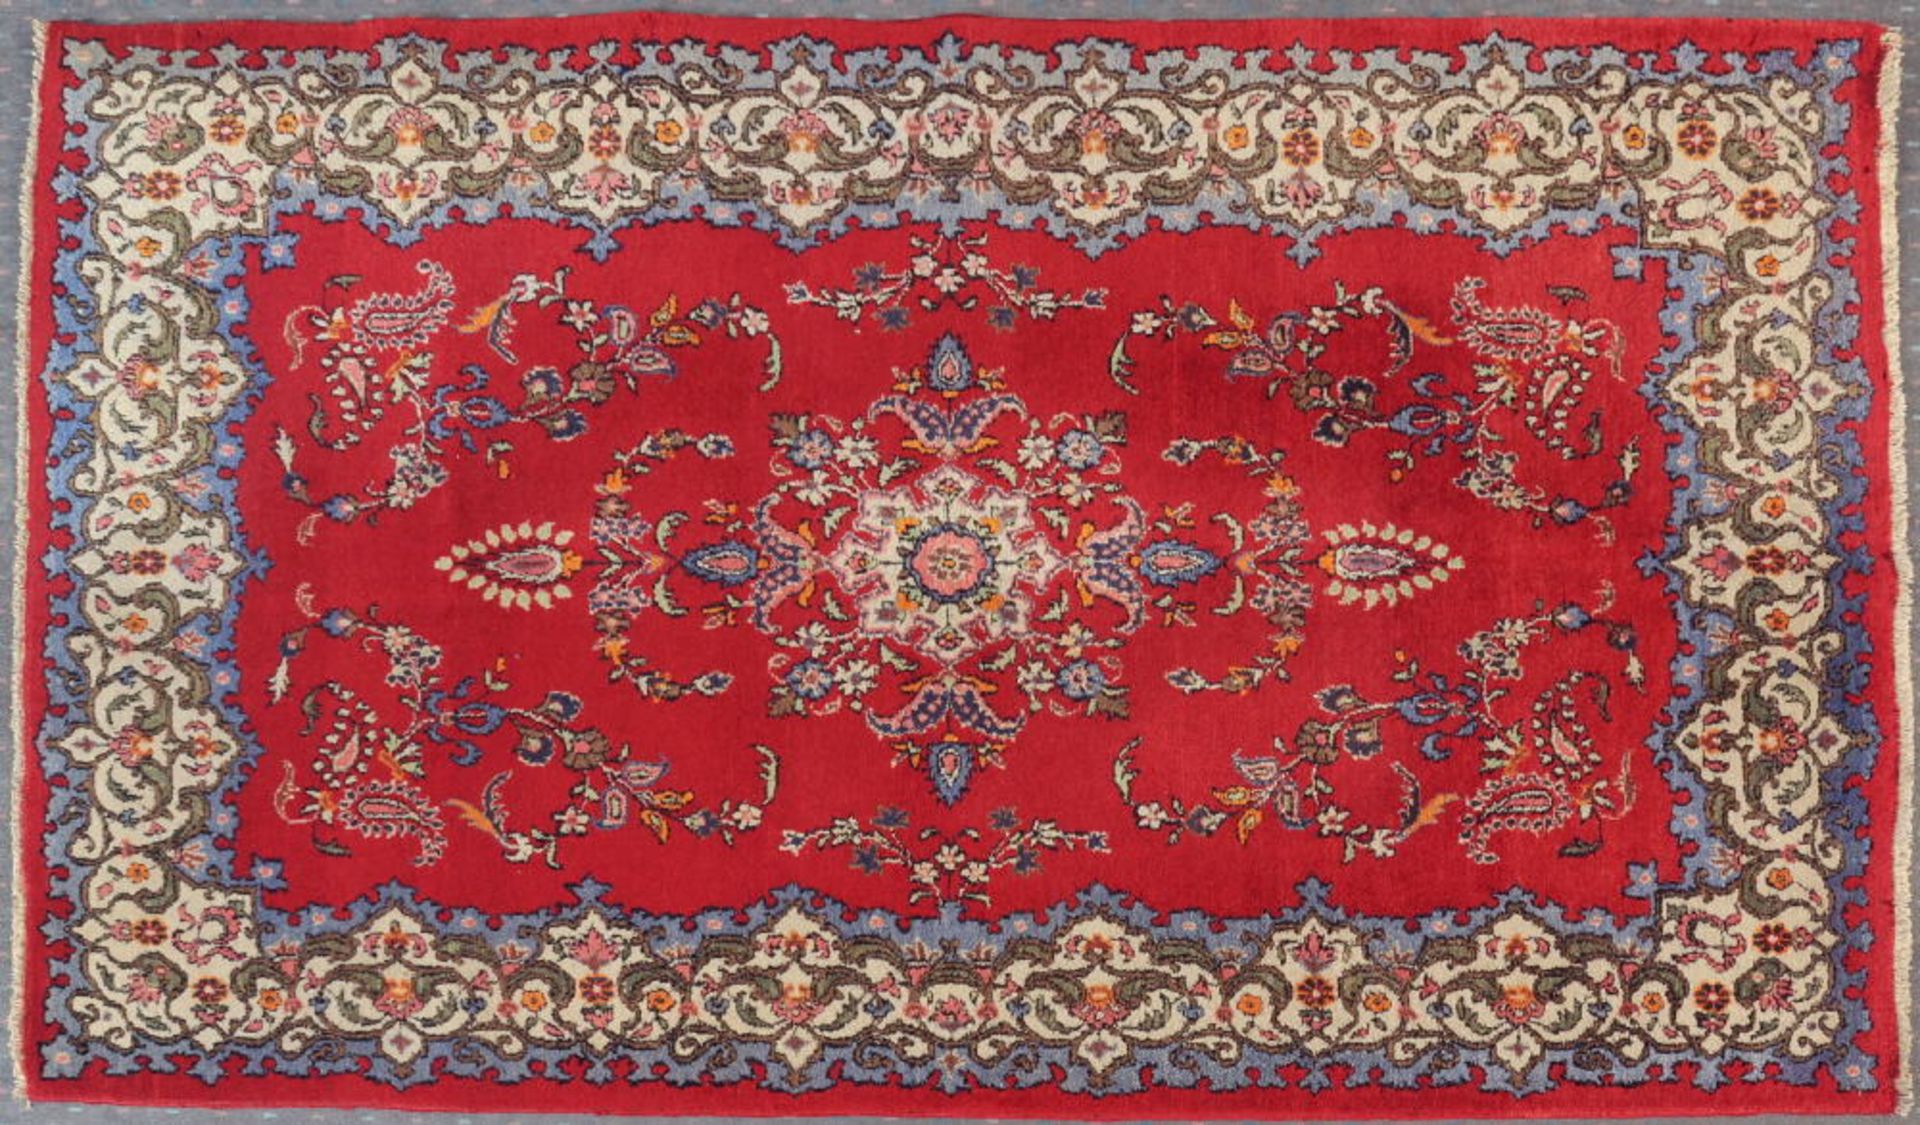 Kirman-Royal, Persien, 134 x 204 cmälter, feine Knüpfung, Wolle, rotgrundig, mehrfarb.